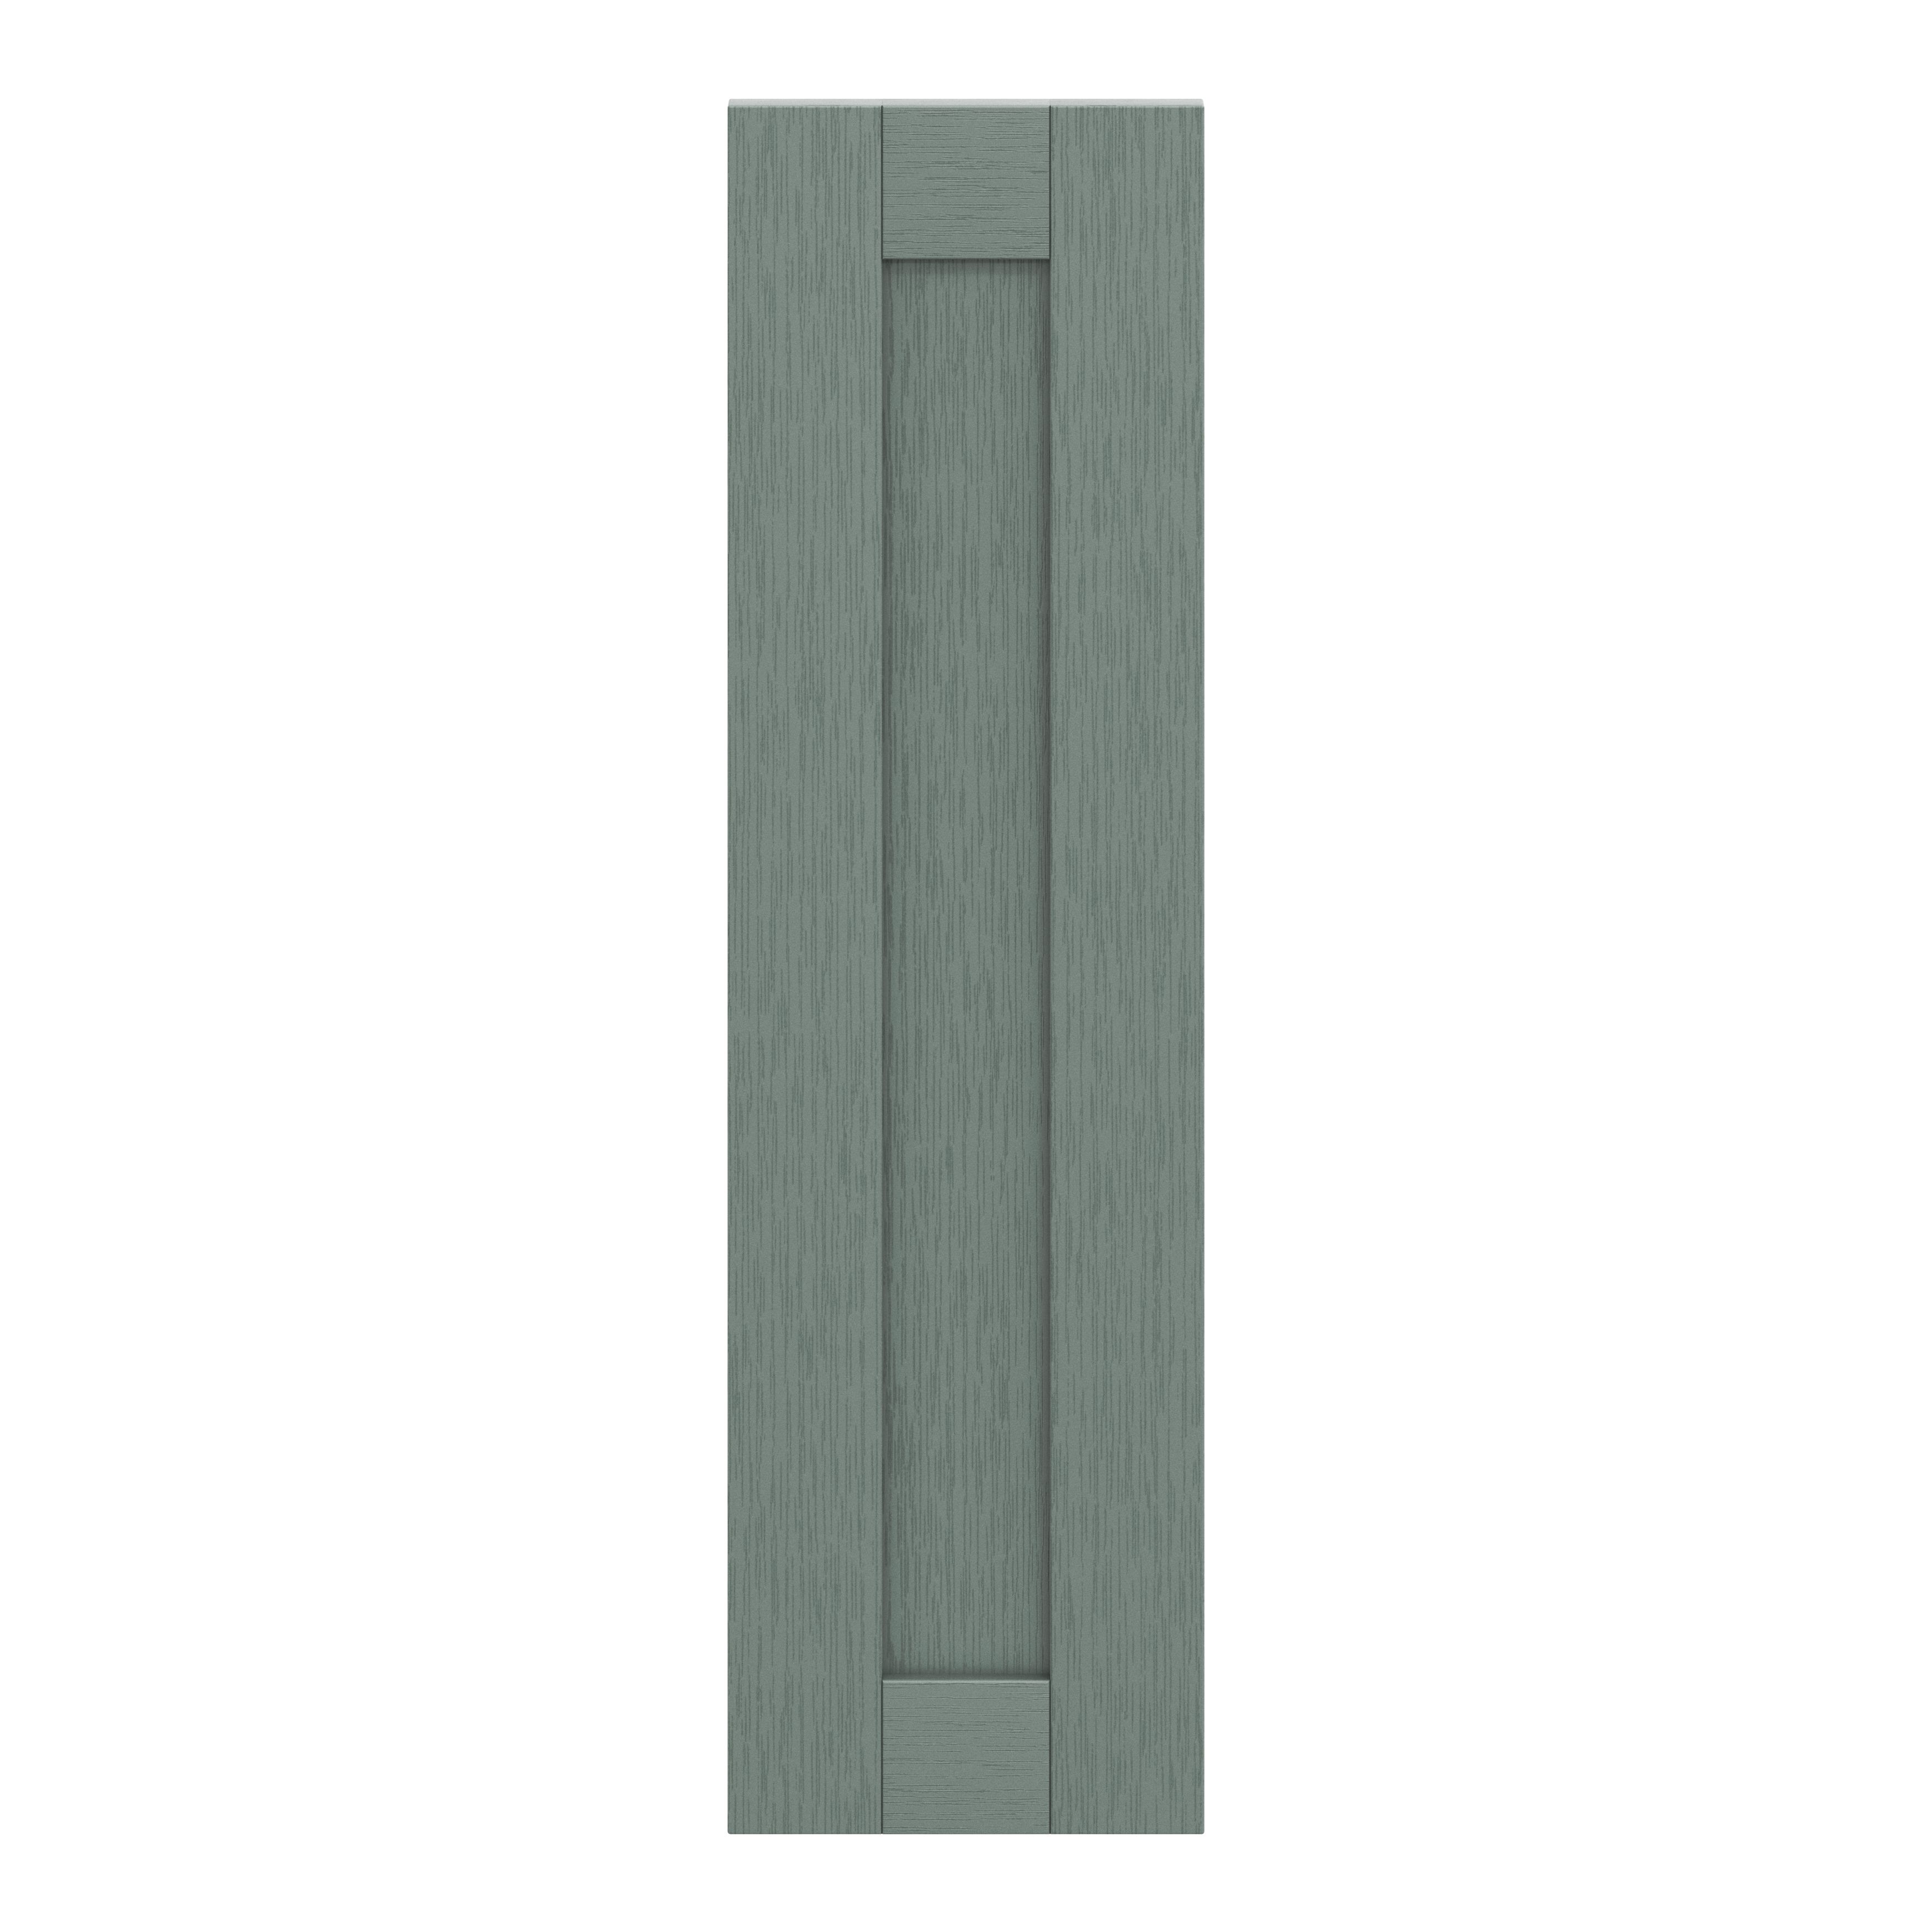 GoodHome Alpinia Matt Green Painted Wood Effect Shaker Tall wall Cabinet door (W)250mm (H)895mm (T)18mm